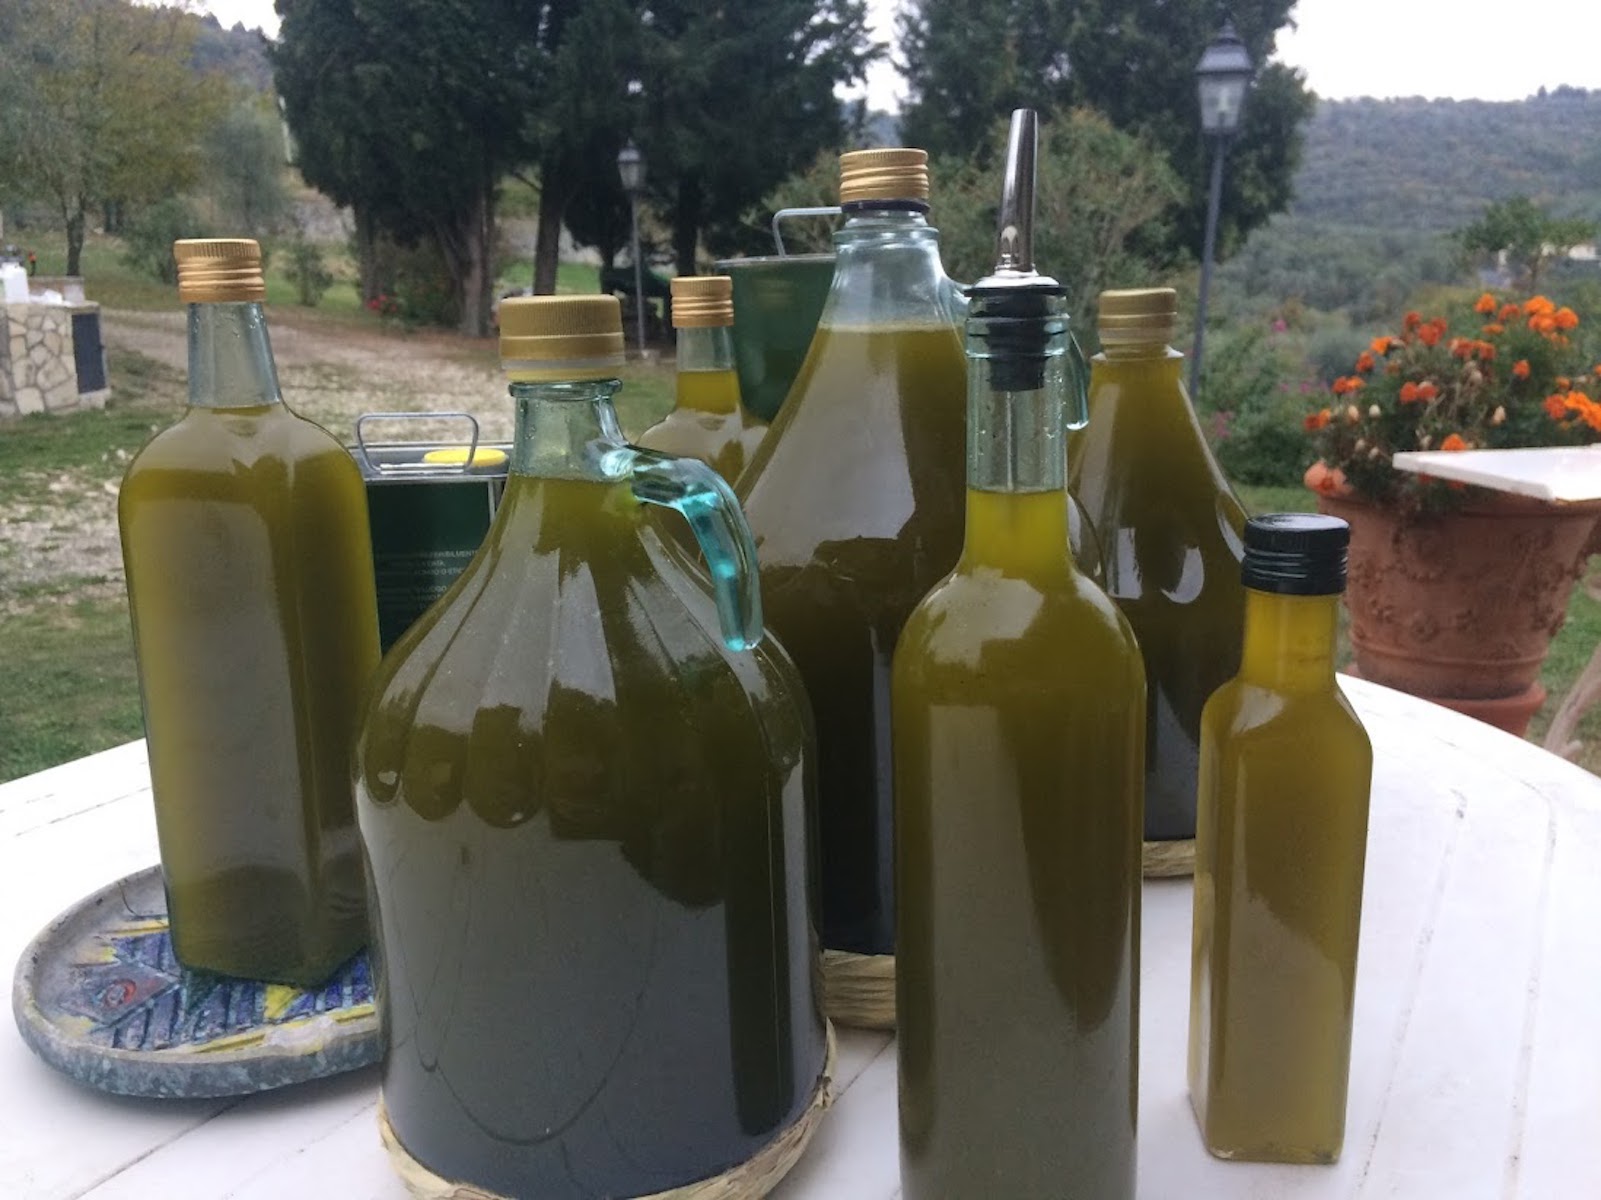 Production huile d'olive - Florence Villa Violetta